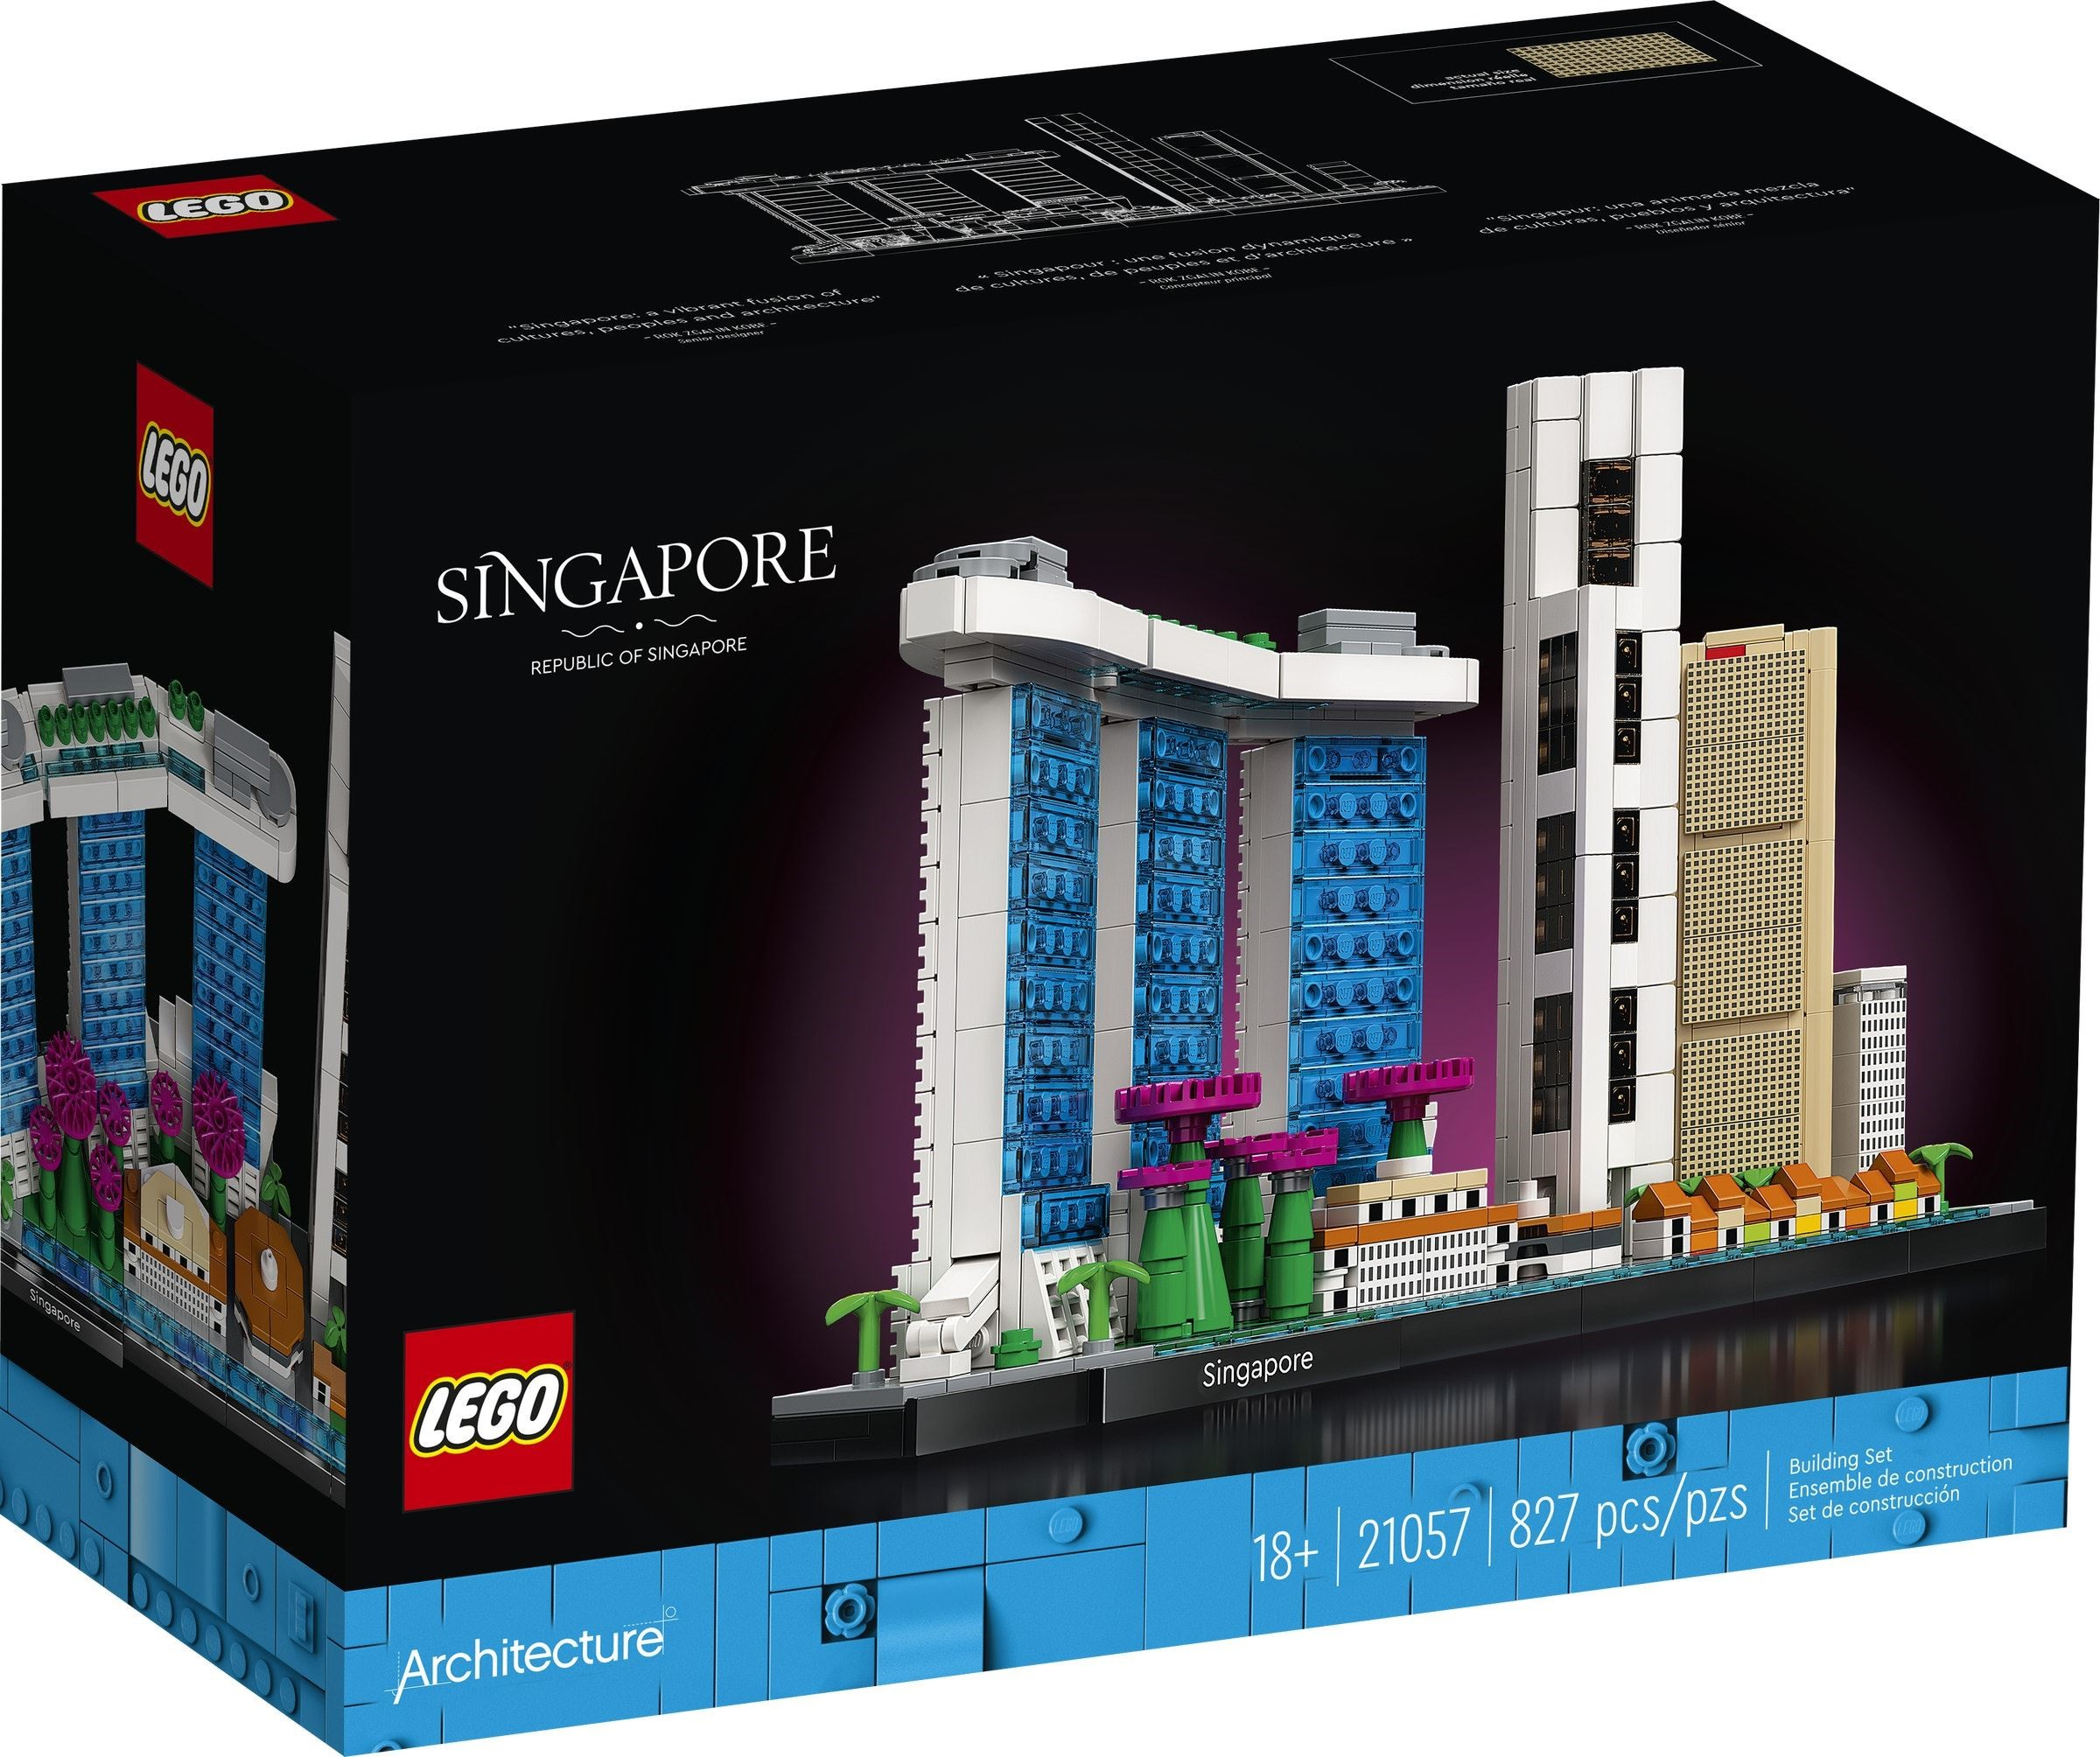 Singapore-11256